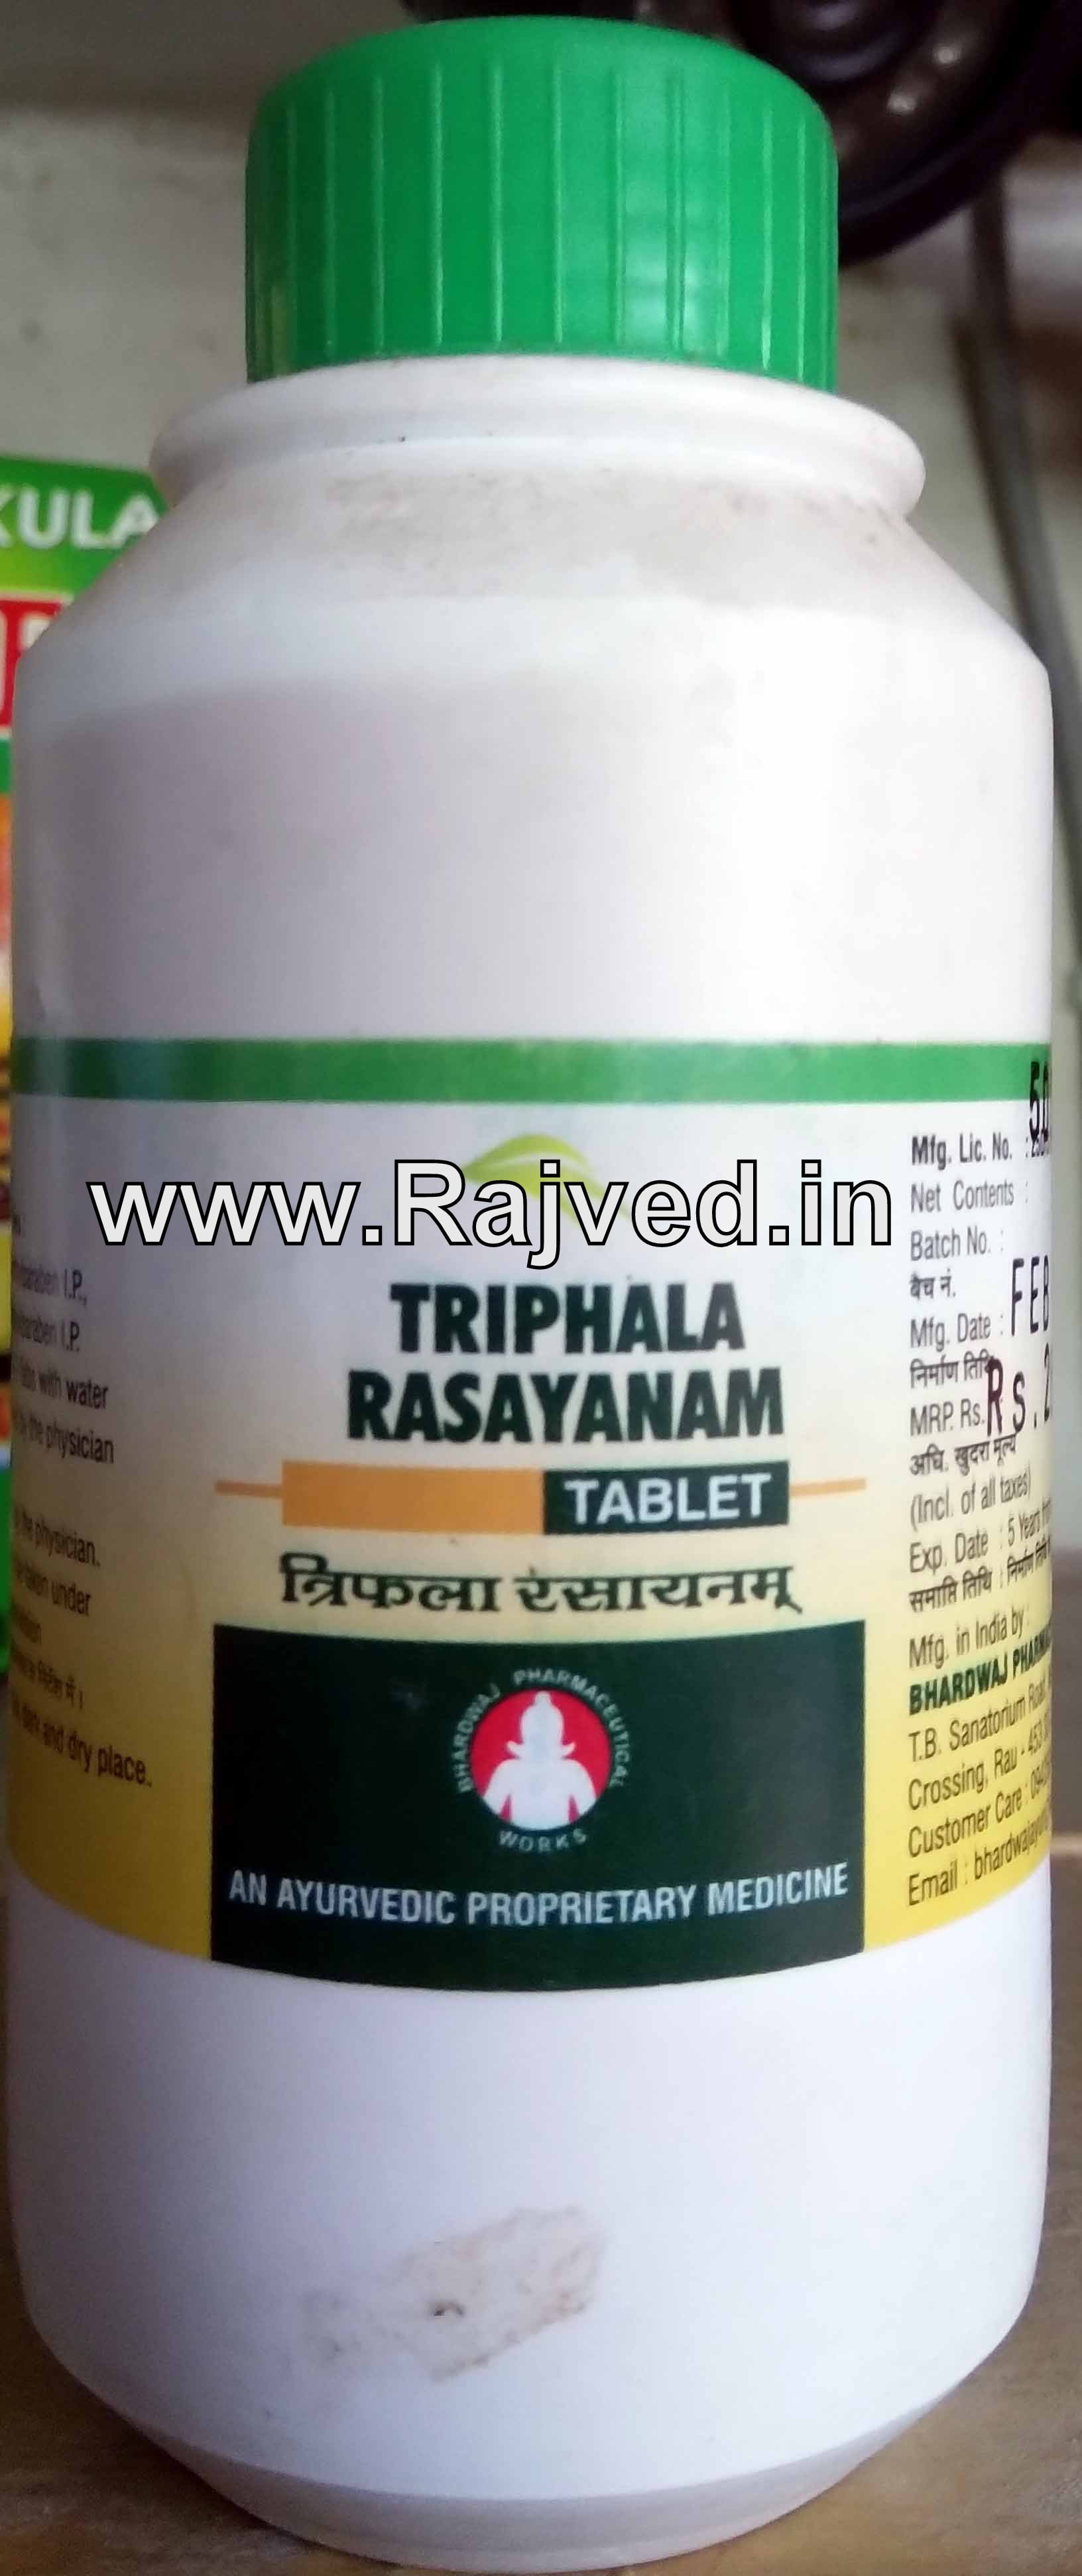 triphala rasayanam 5000 tab upto 20% off free shipping Bharadwaj Pharmaceuticals Indore